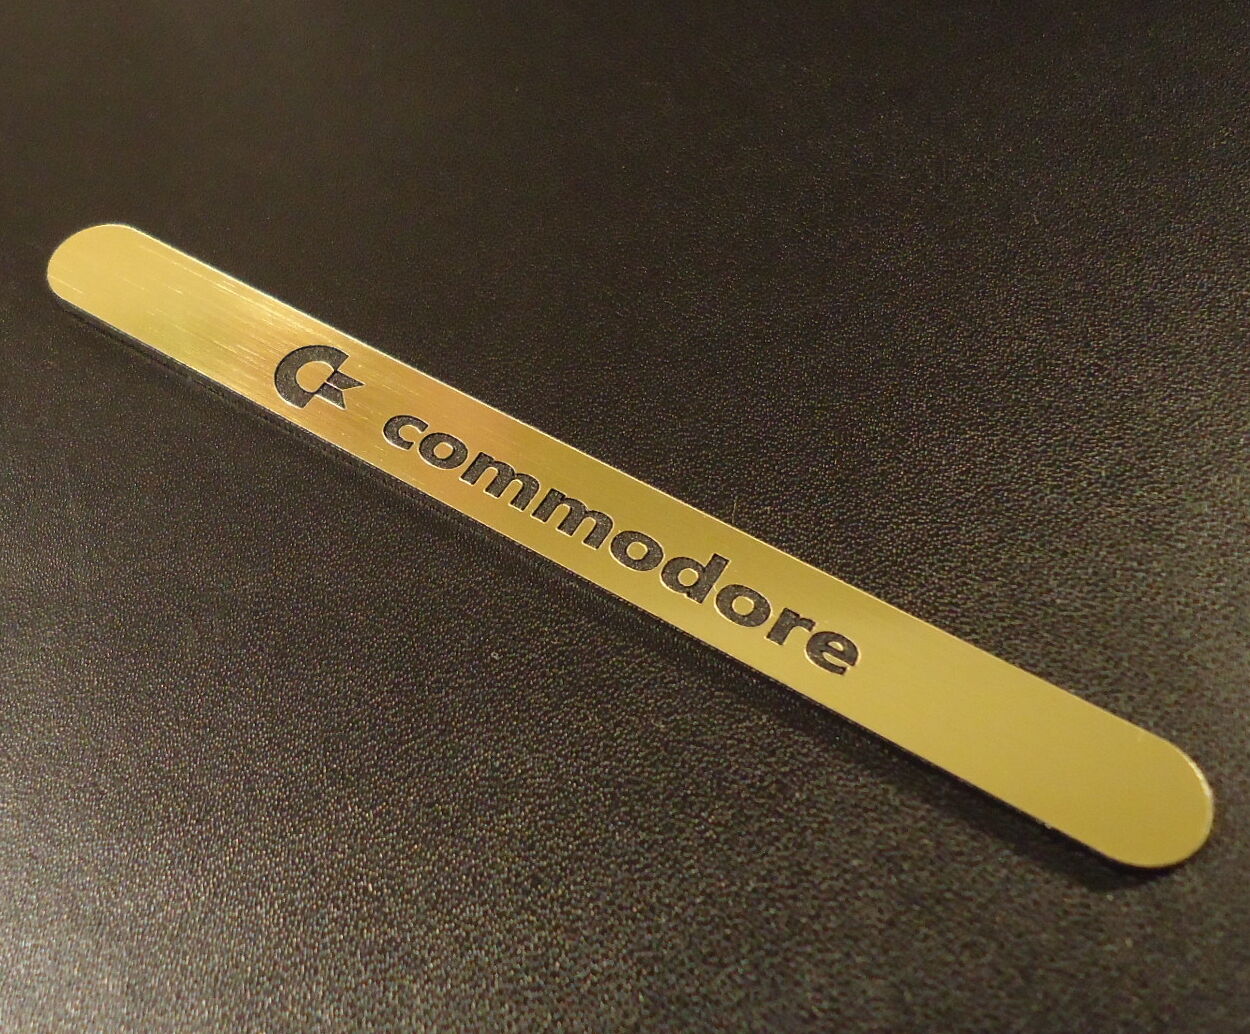 Commodore C64 Gold Label / Aufkleber / Sticker / Badge / Logo 11 x 1,1cm [241b]